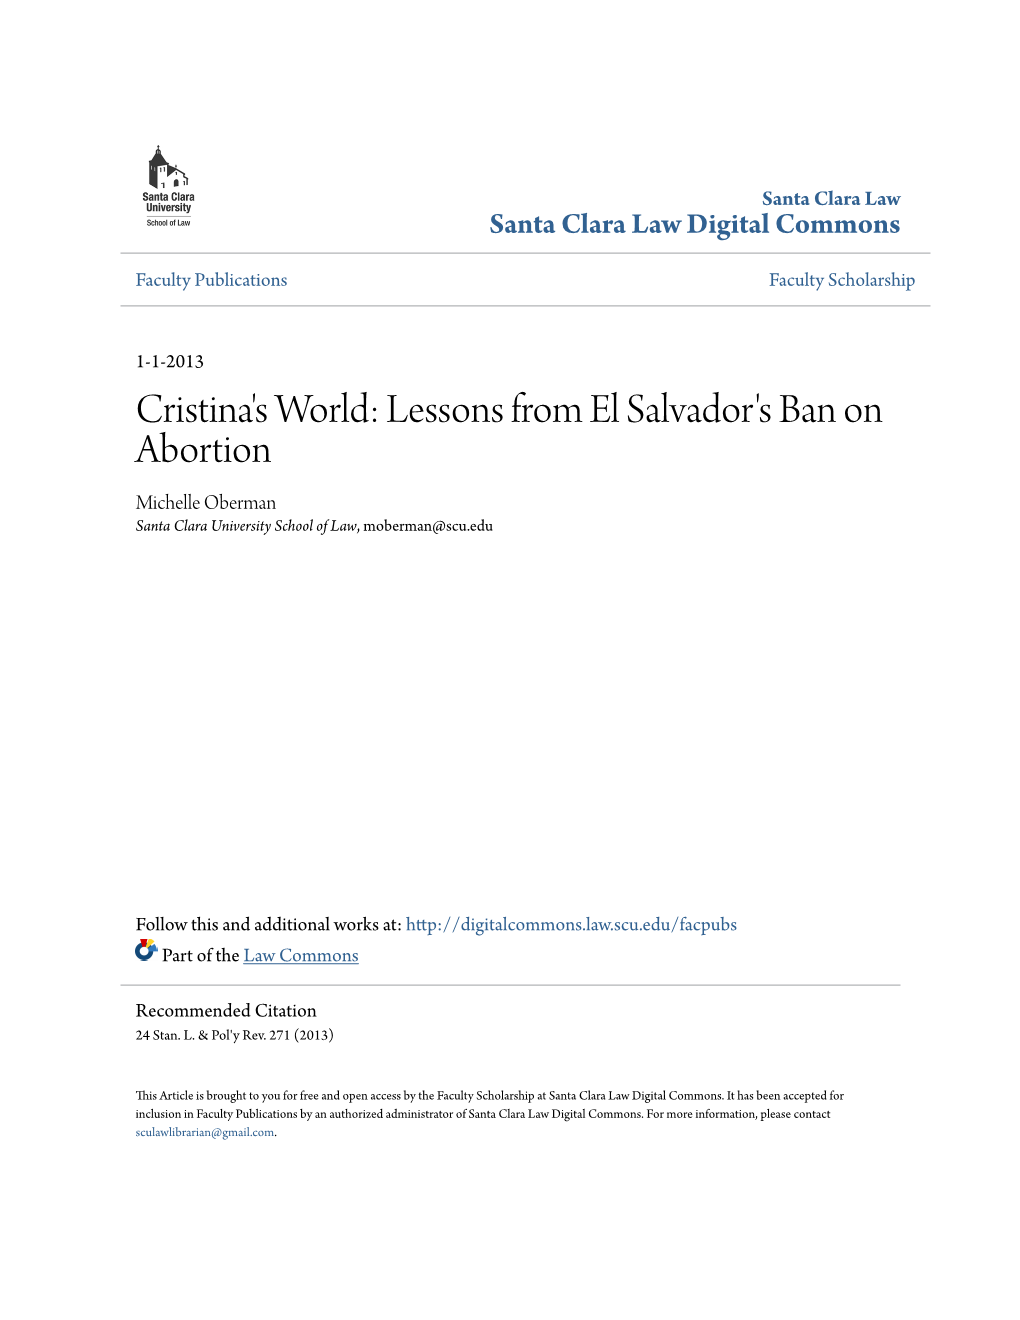 Lessons from El Salvador's Ban on Abortion Michelle Oberman Santa Clara University School of Law, Moberman@Scu.Edu